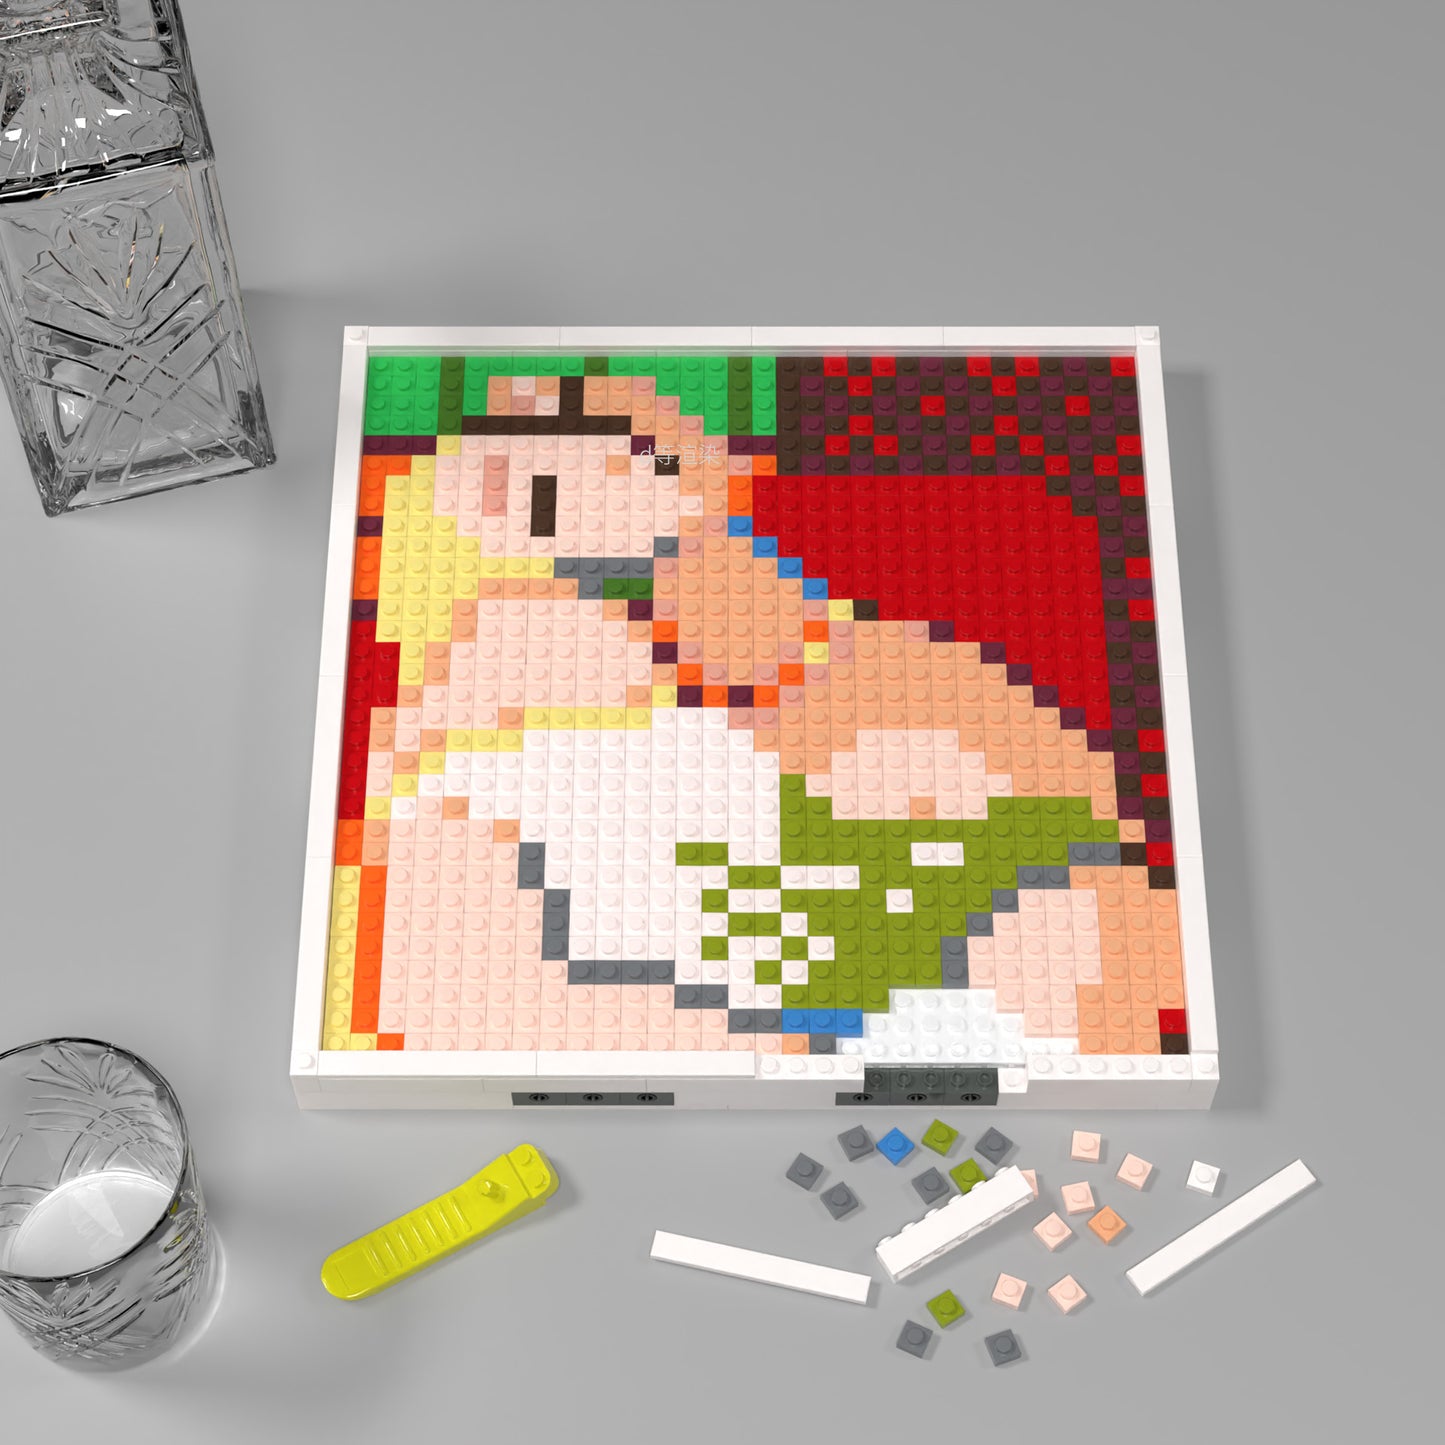 32*32 Compatible Lego Pieces Picasso's The Dream Pixel Art